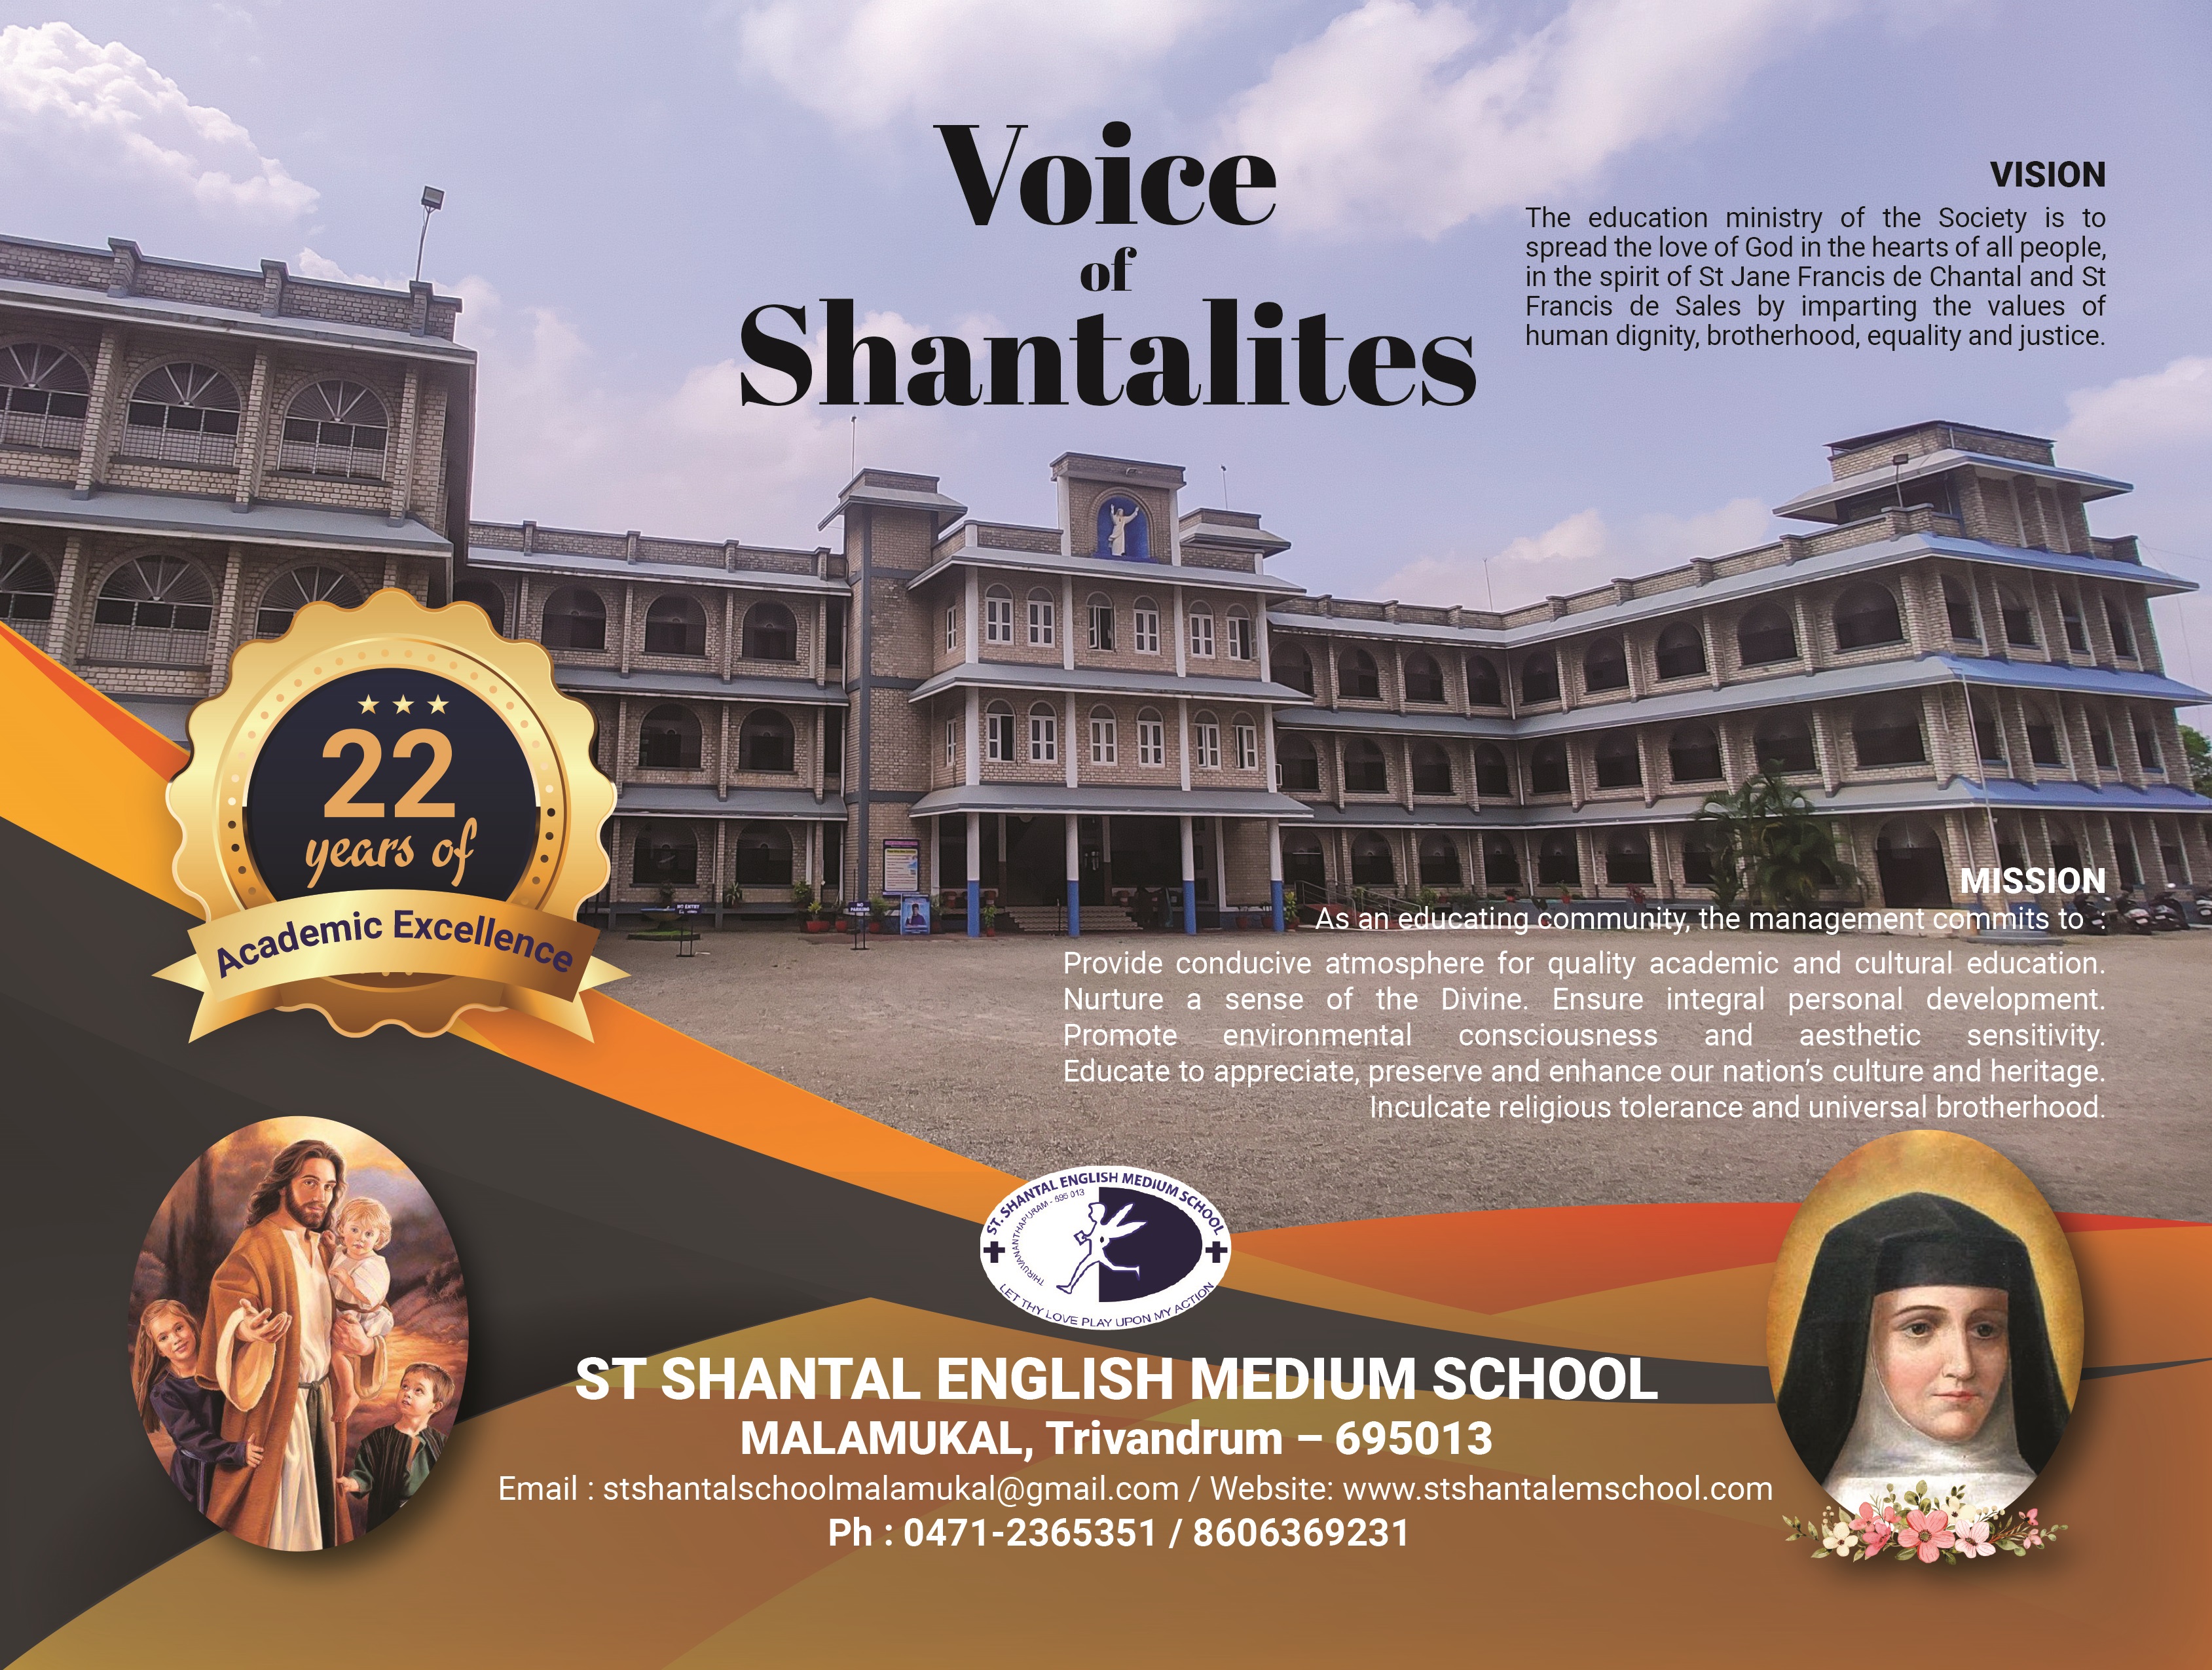 Voice of Shantalites